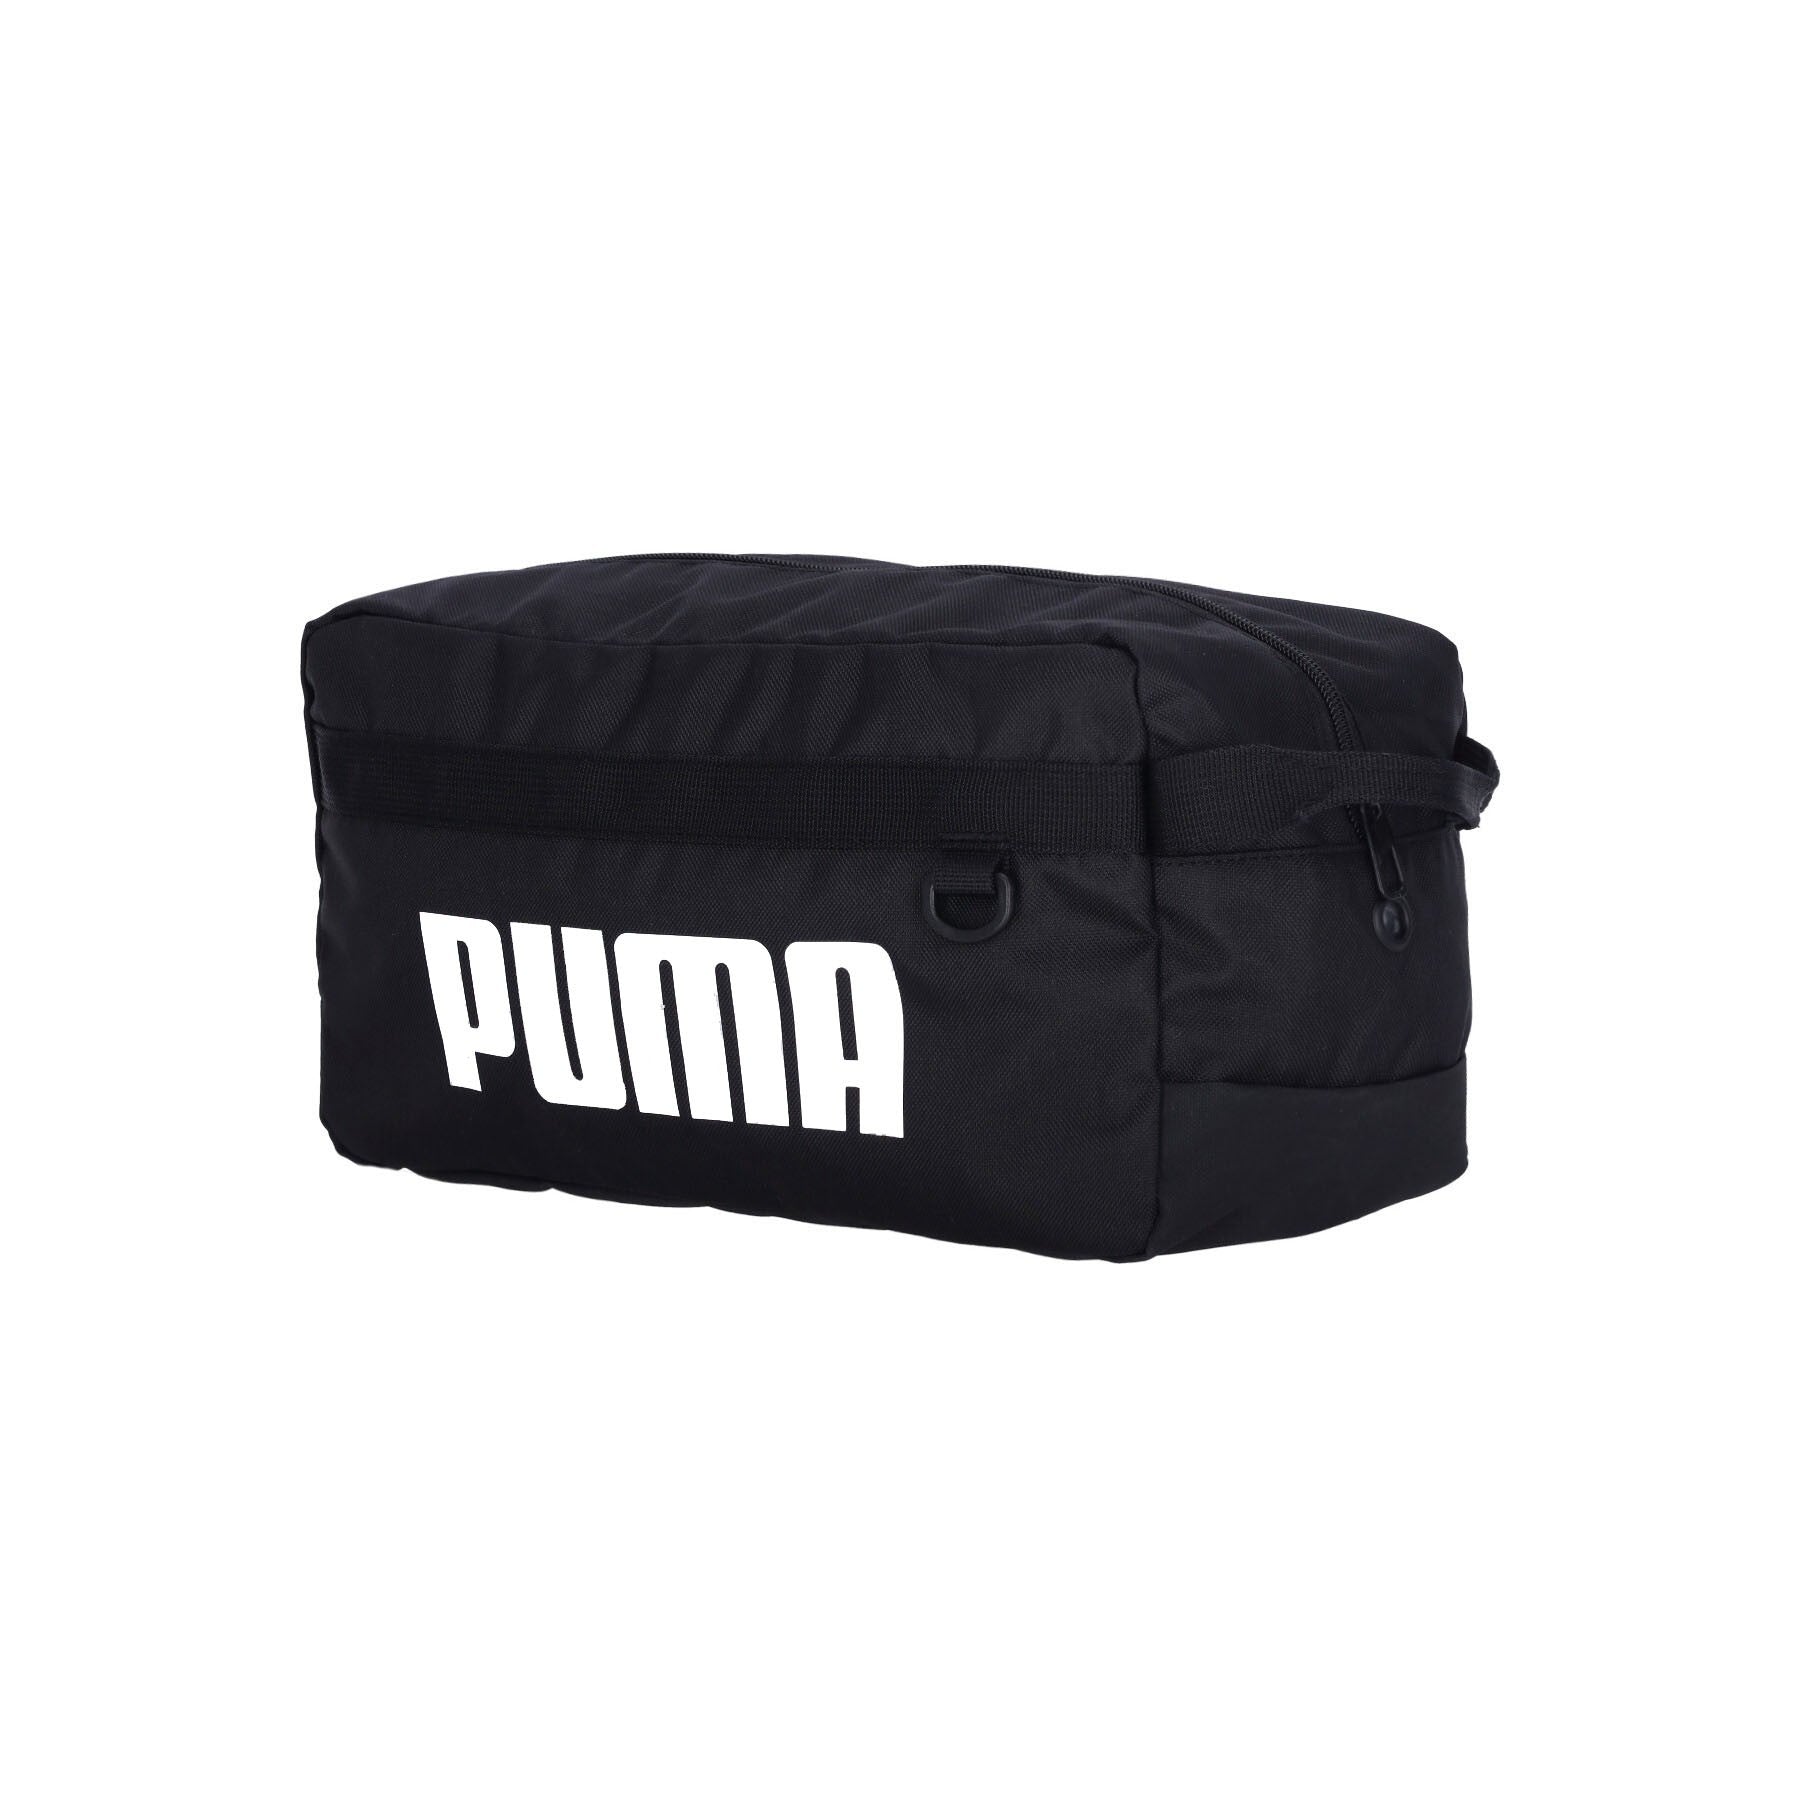 Puma, Borsa Portascarpe Uomo Challenger Shoes Bag, Black